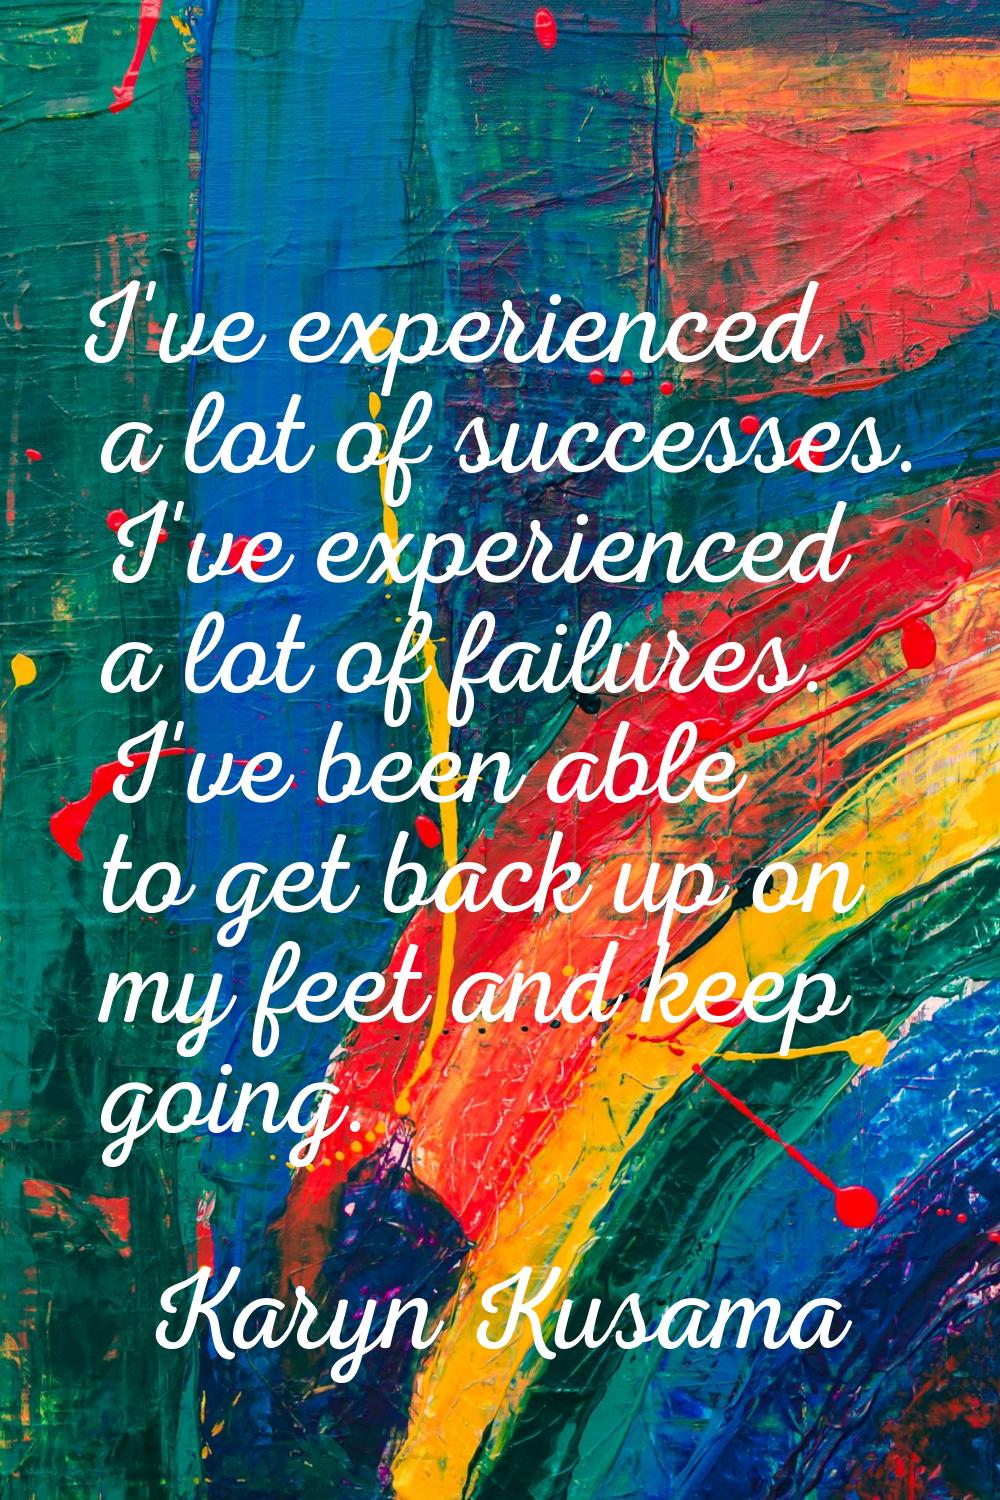 I've experienced a lot of successes. I've experienced a lot of failures. I've been able to get back